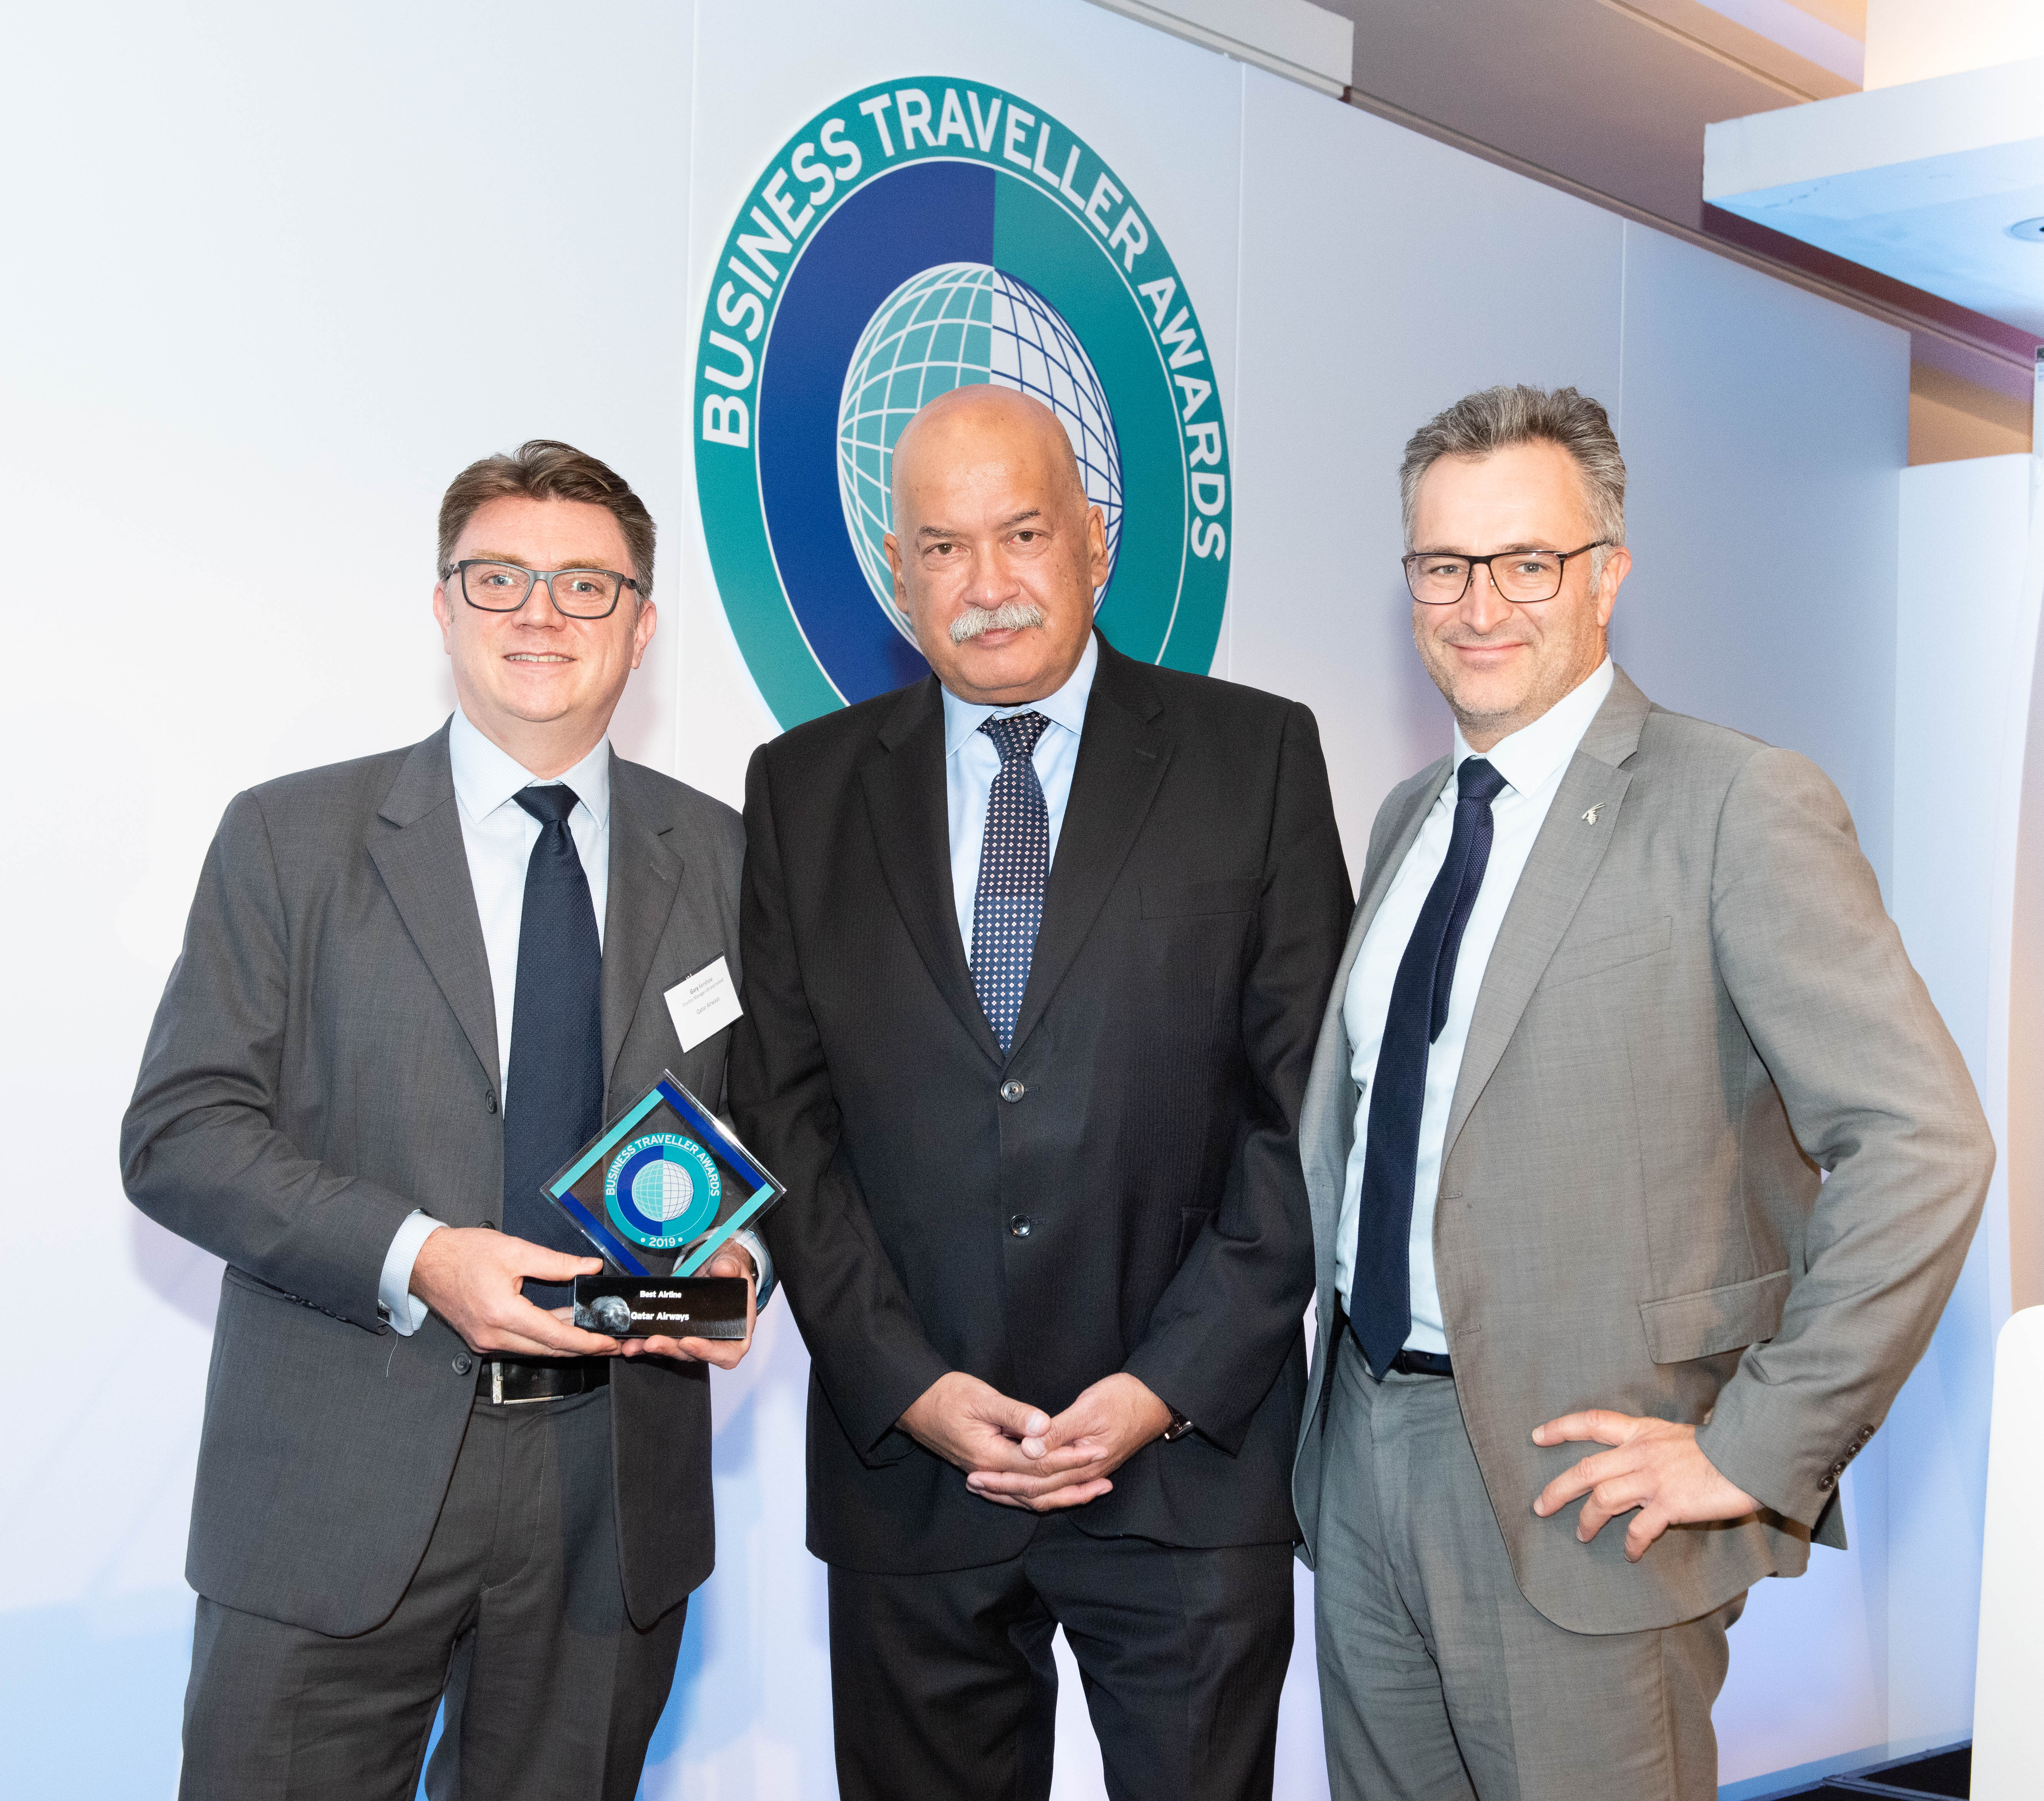 Qatar Airways awarded ‘Best Airline’ at 2019 UK Business Traveller Awards